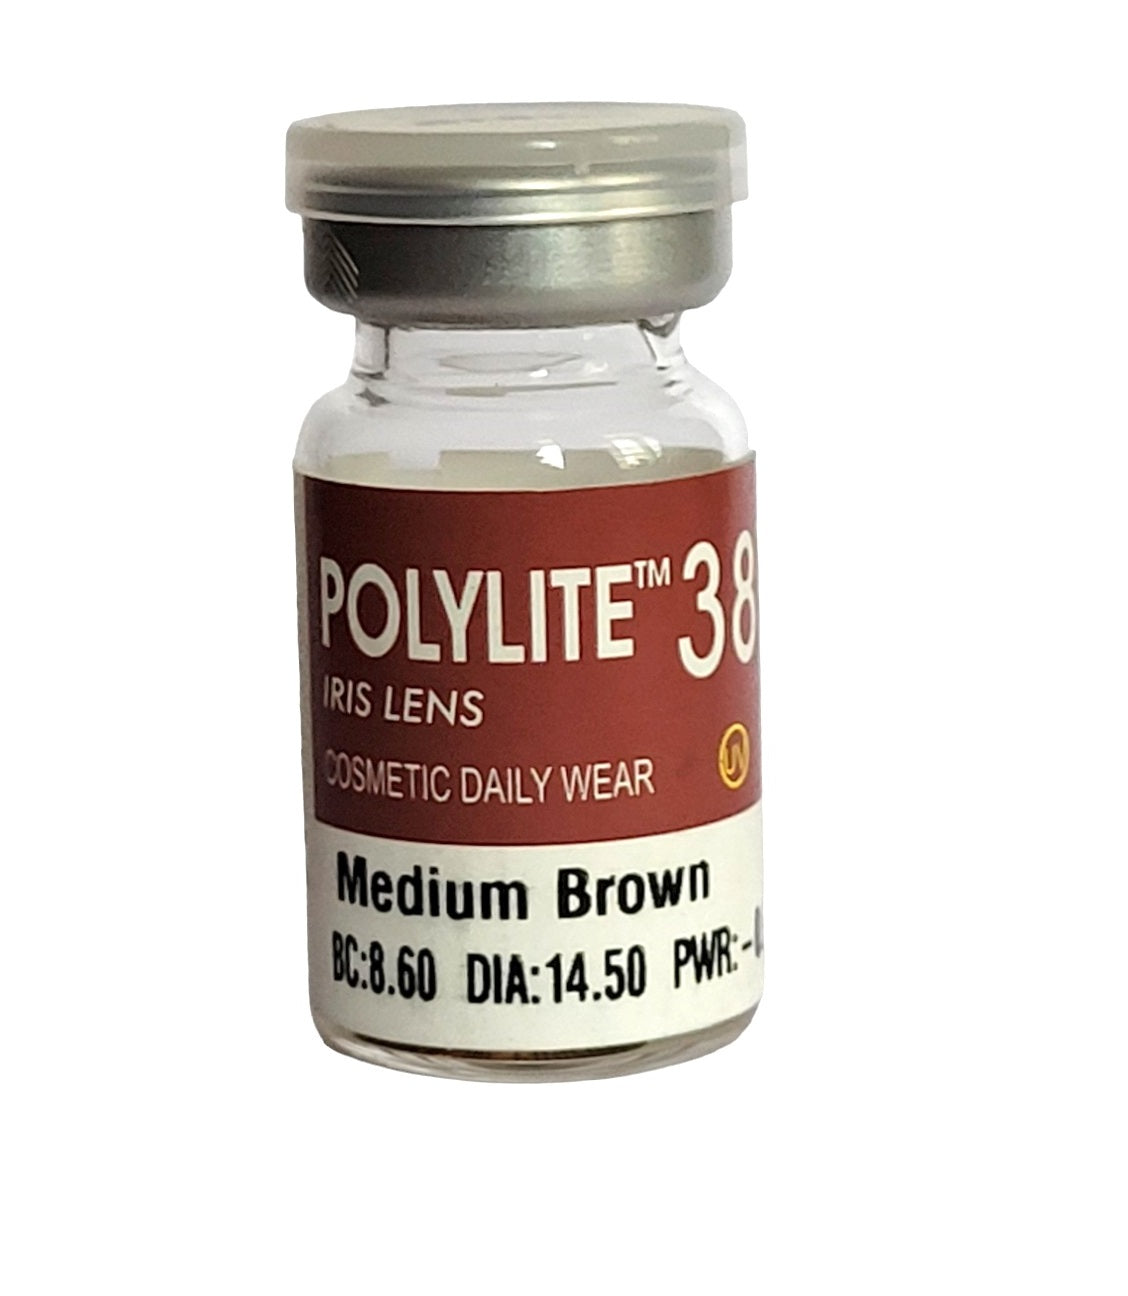 Prosthetic Contact lenses Medium Brown Polylite 38